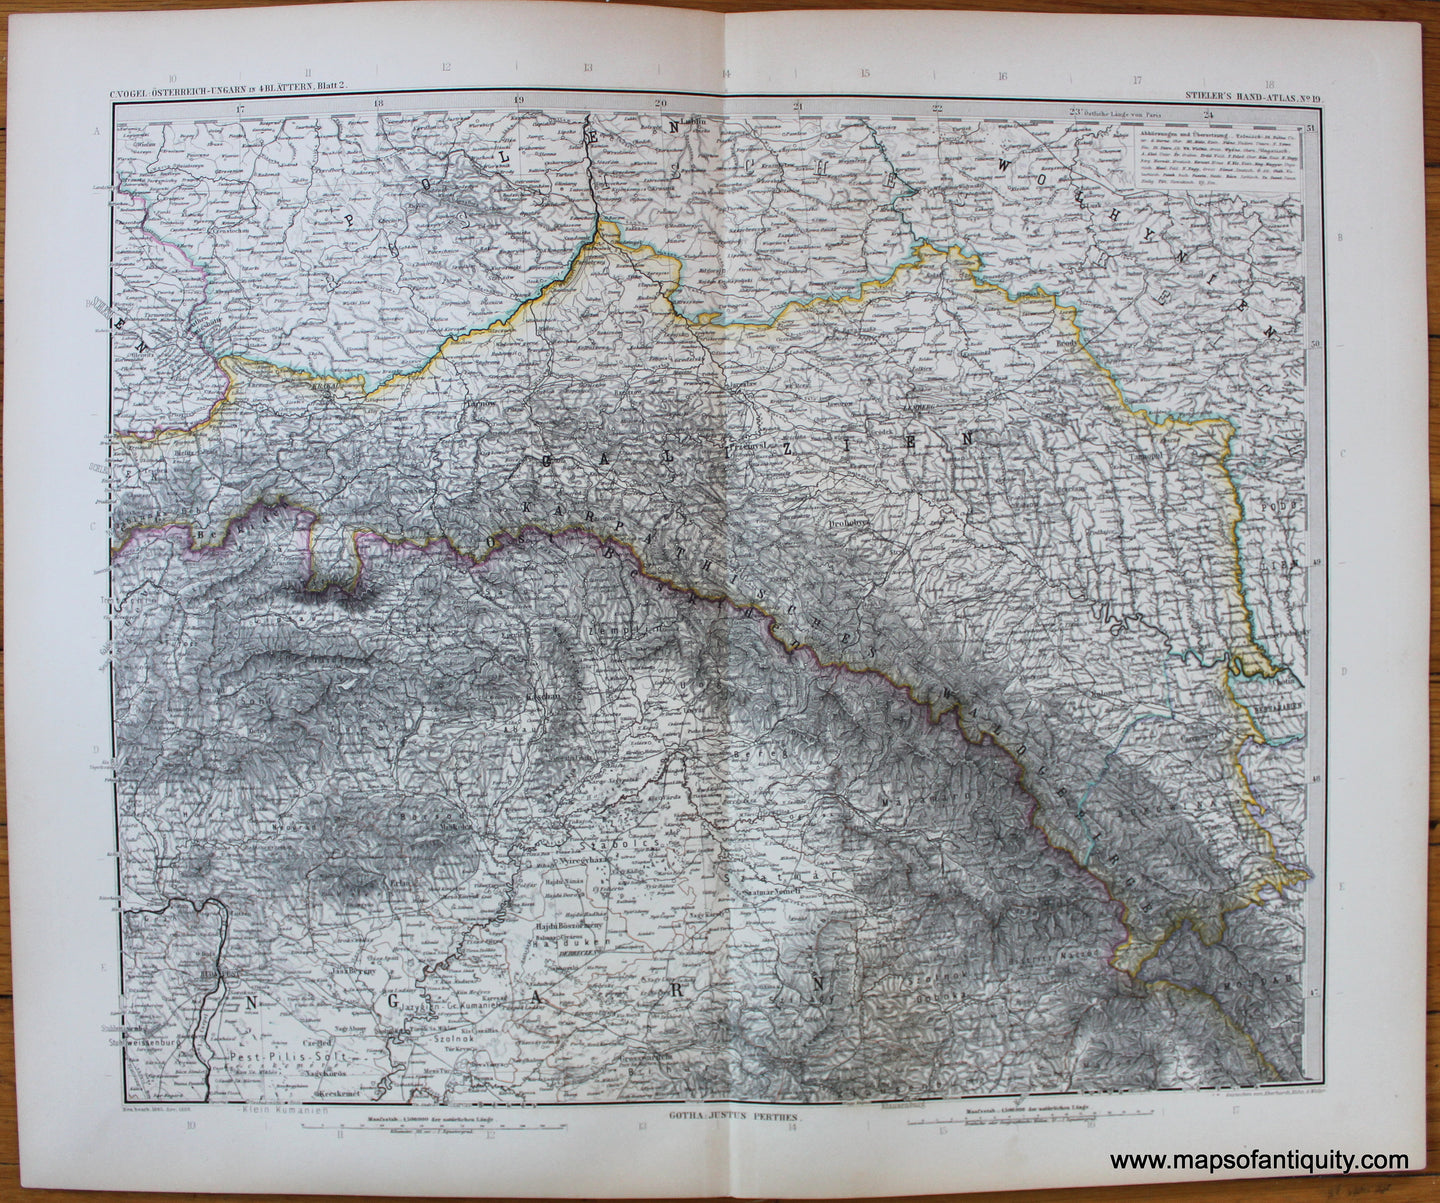 Antique-Printed-Color-Map-Austria-and-Hungarian-Empire---Osterreich-Ungarn-in-4-Blattern-Blatt-1-Europe-Austria-c.-1889-Stieler-Maps-Of-Antiquity-1800s-19th-century